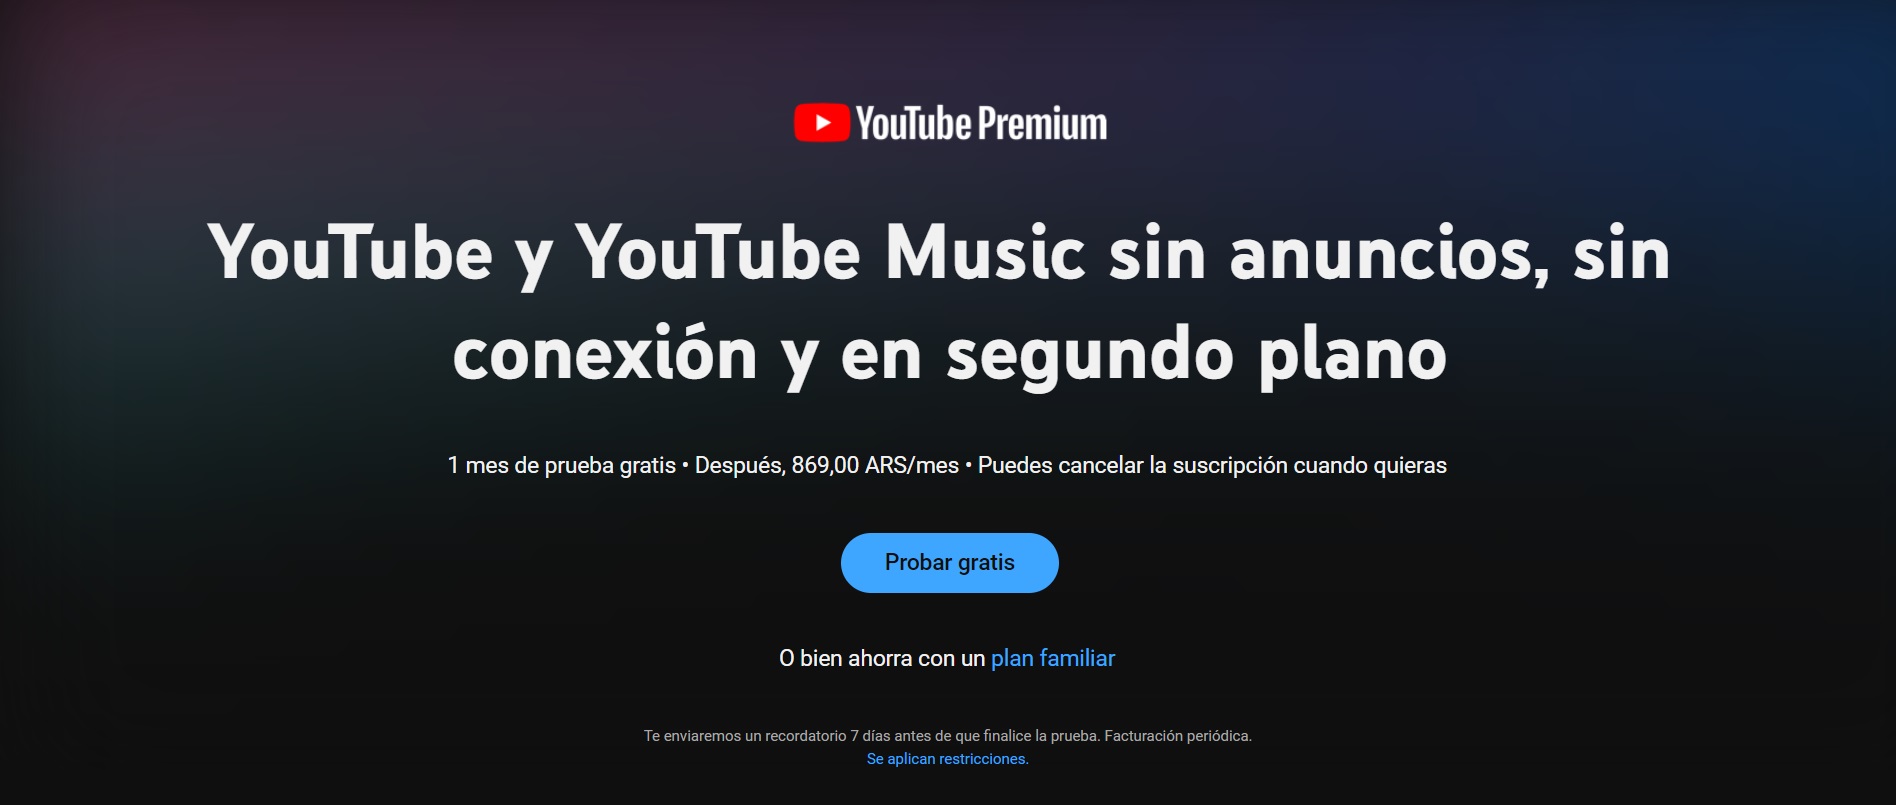 YouTube Premium aumento